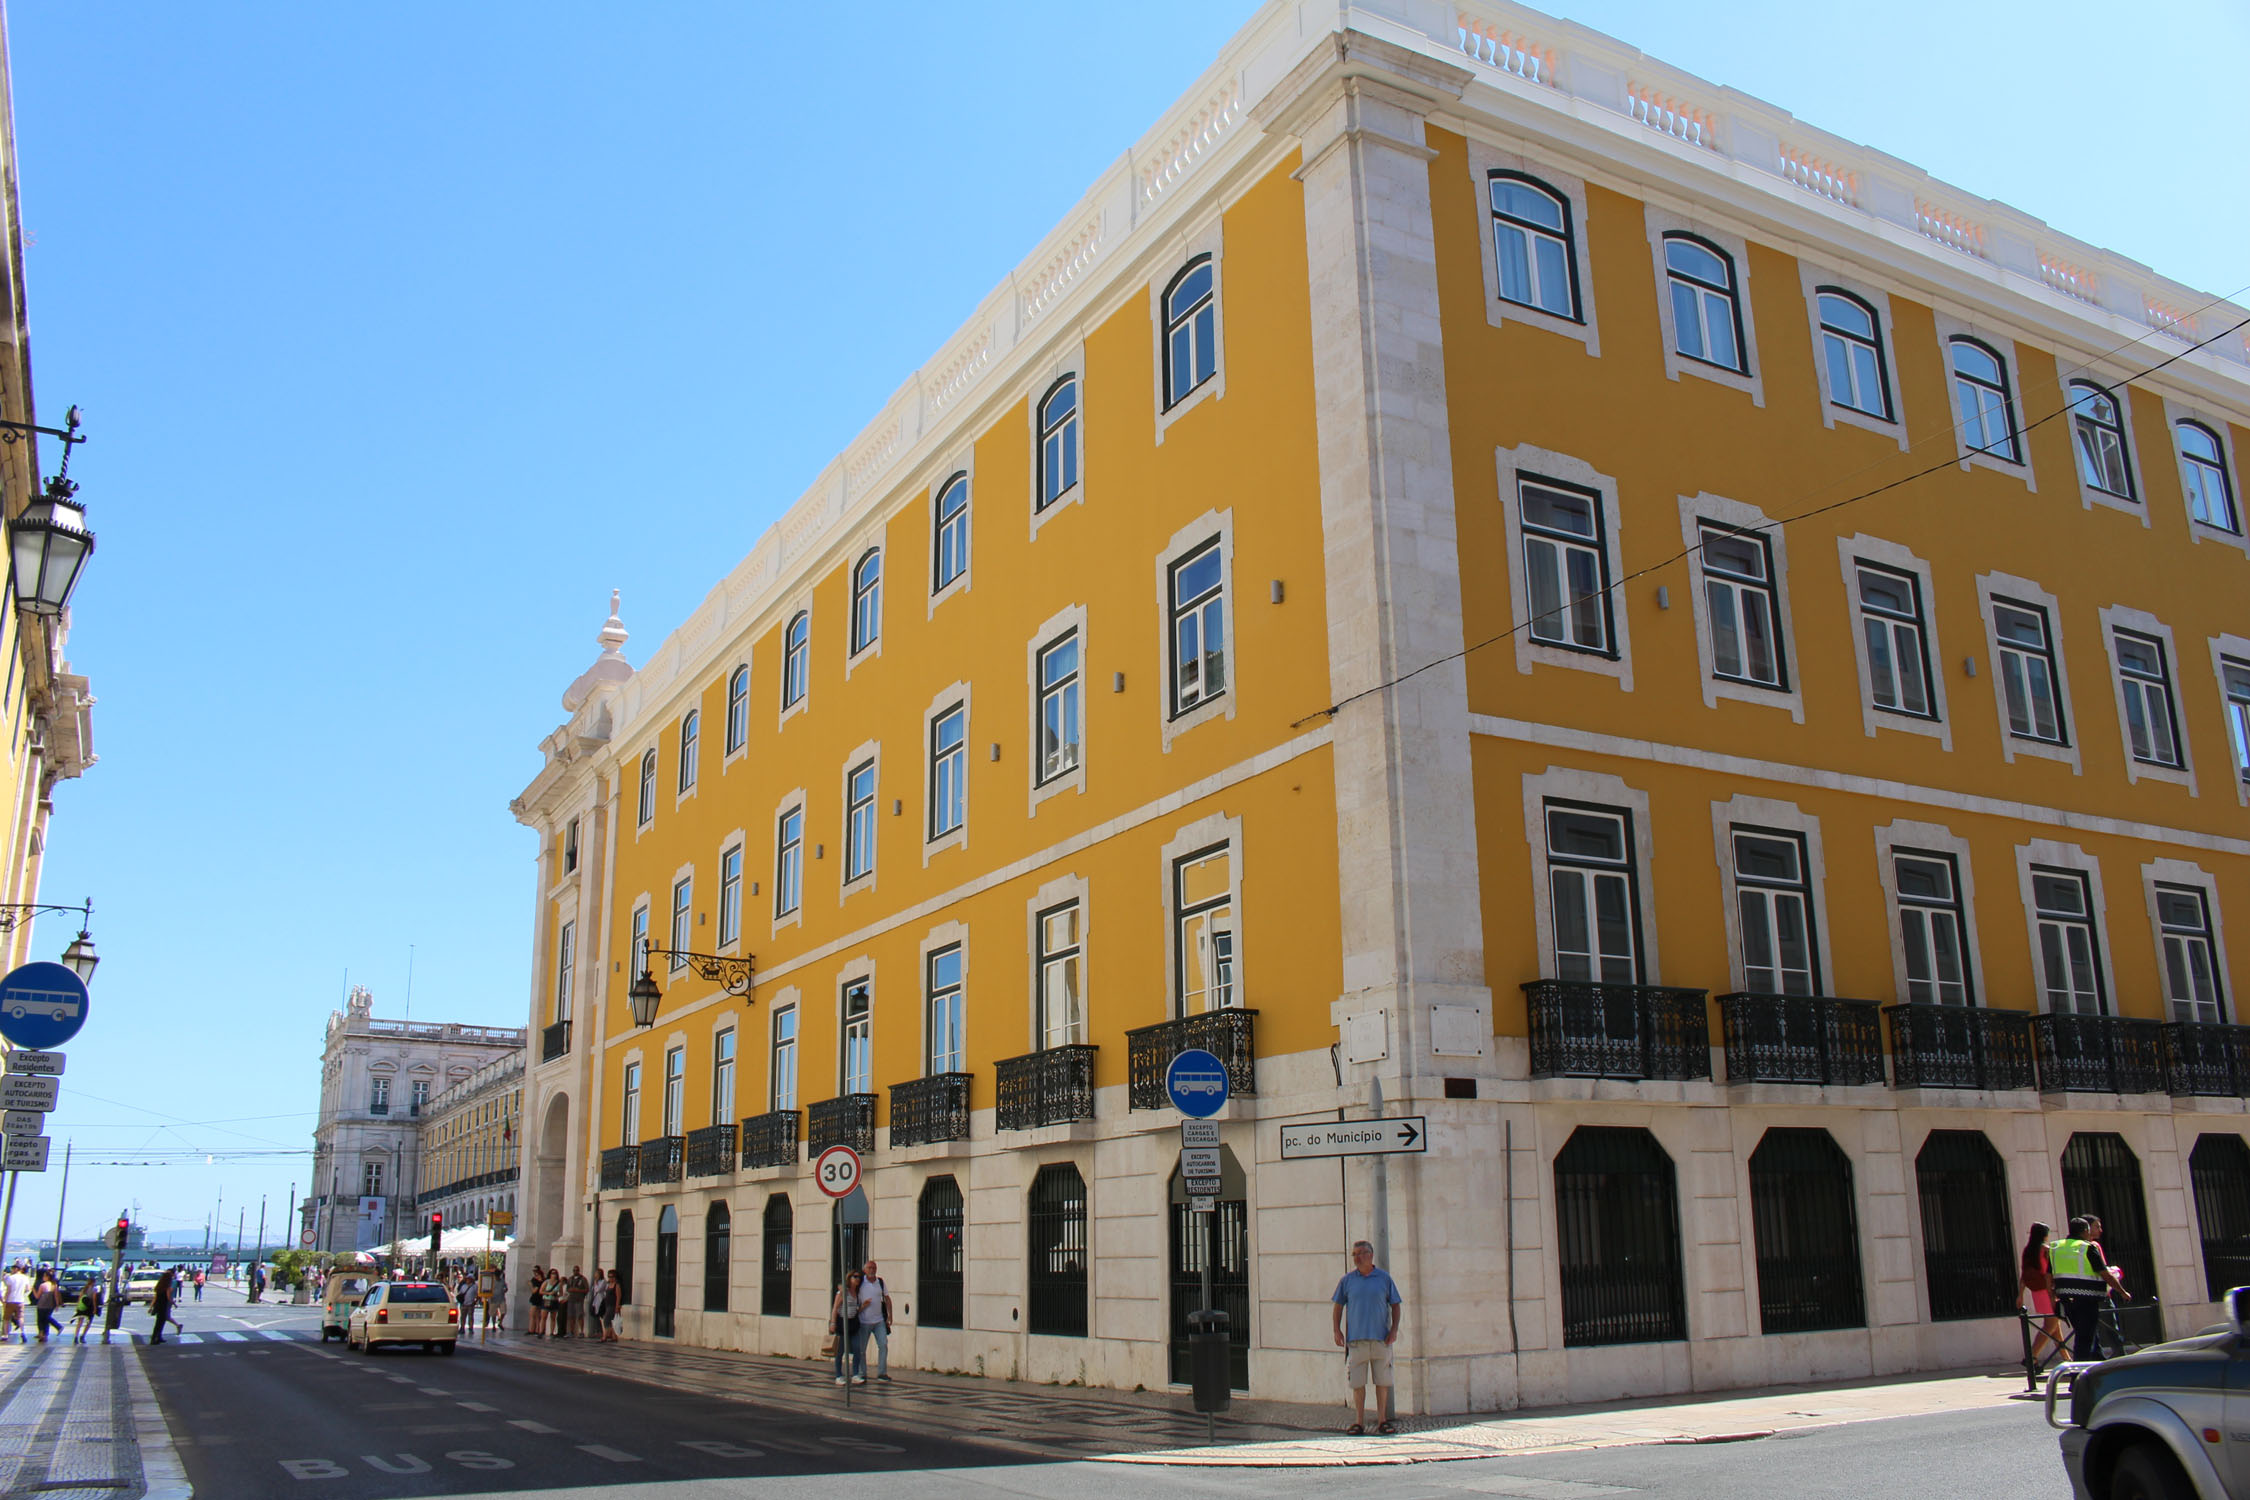 Lisbonne, rua do Ouro, bâtiment